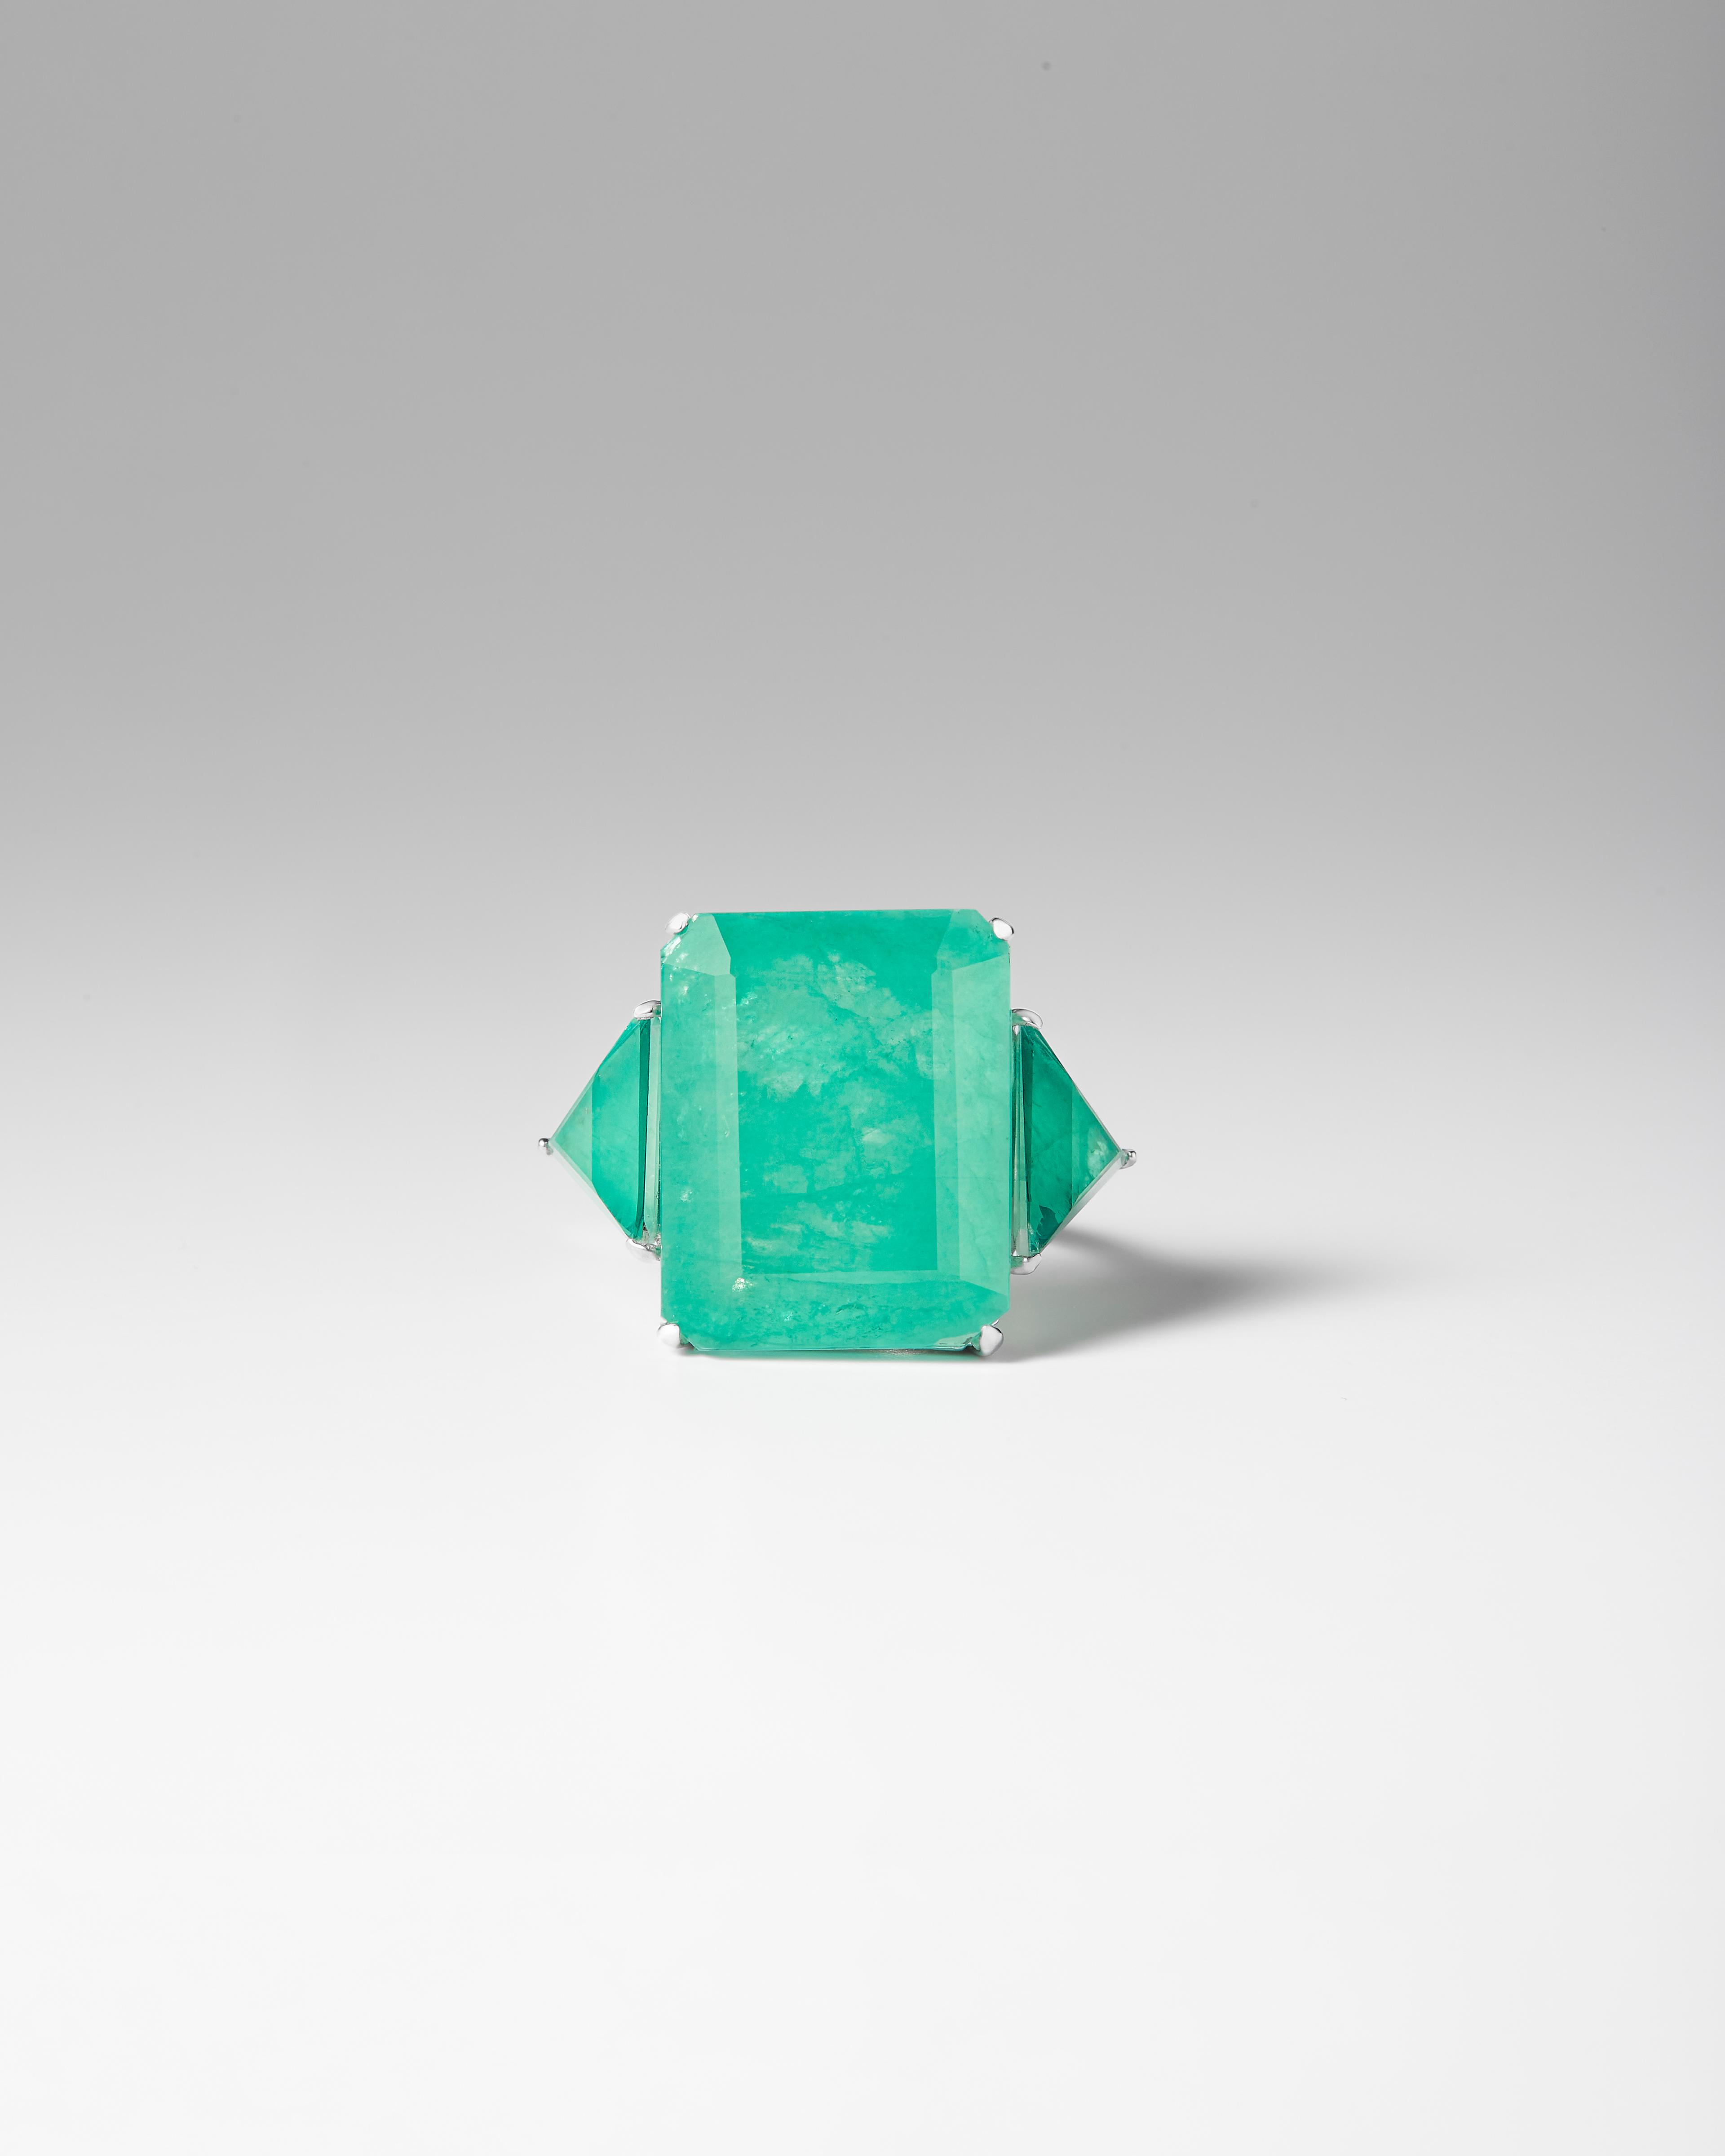 Green emerald cut ring